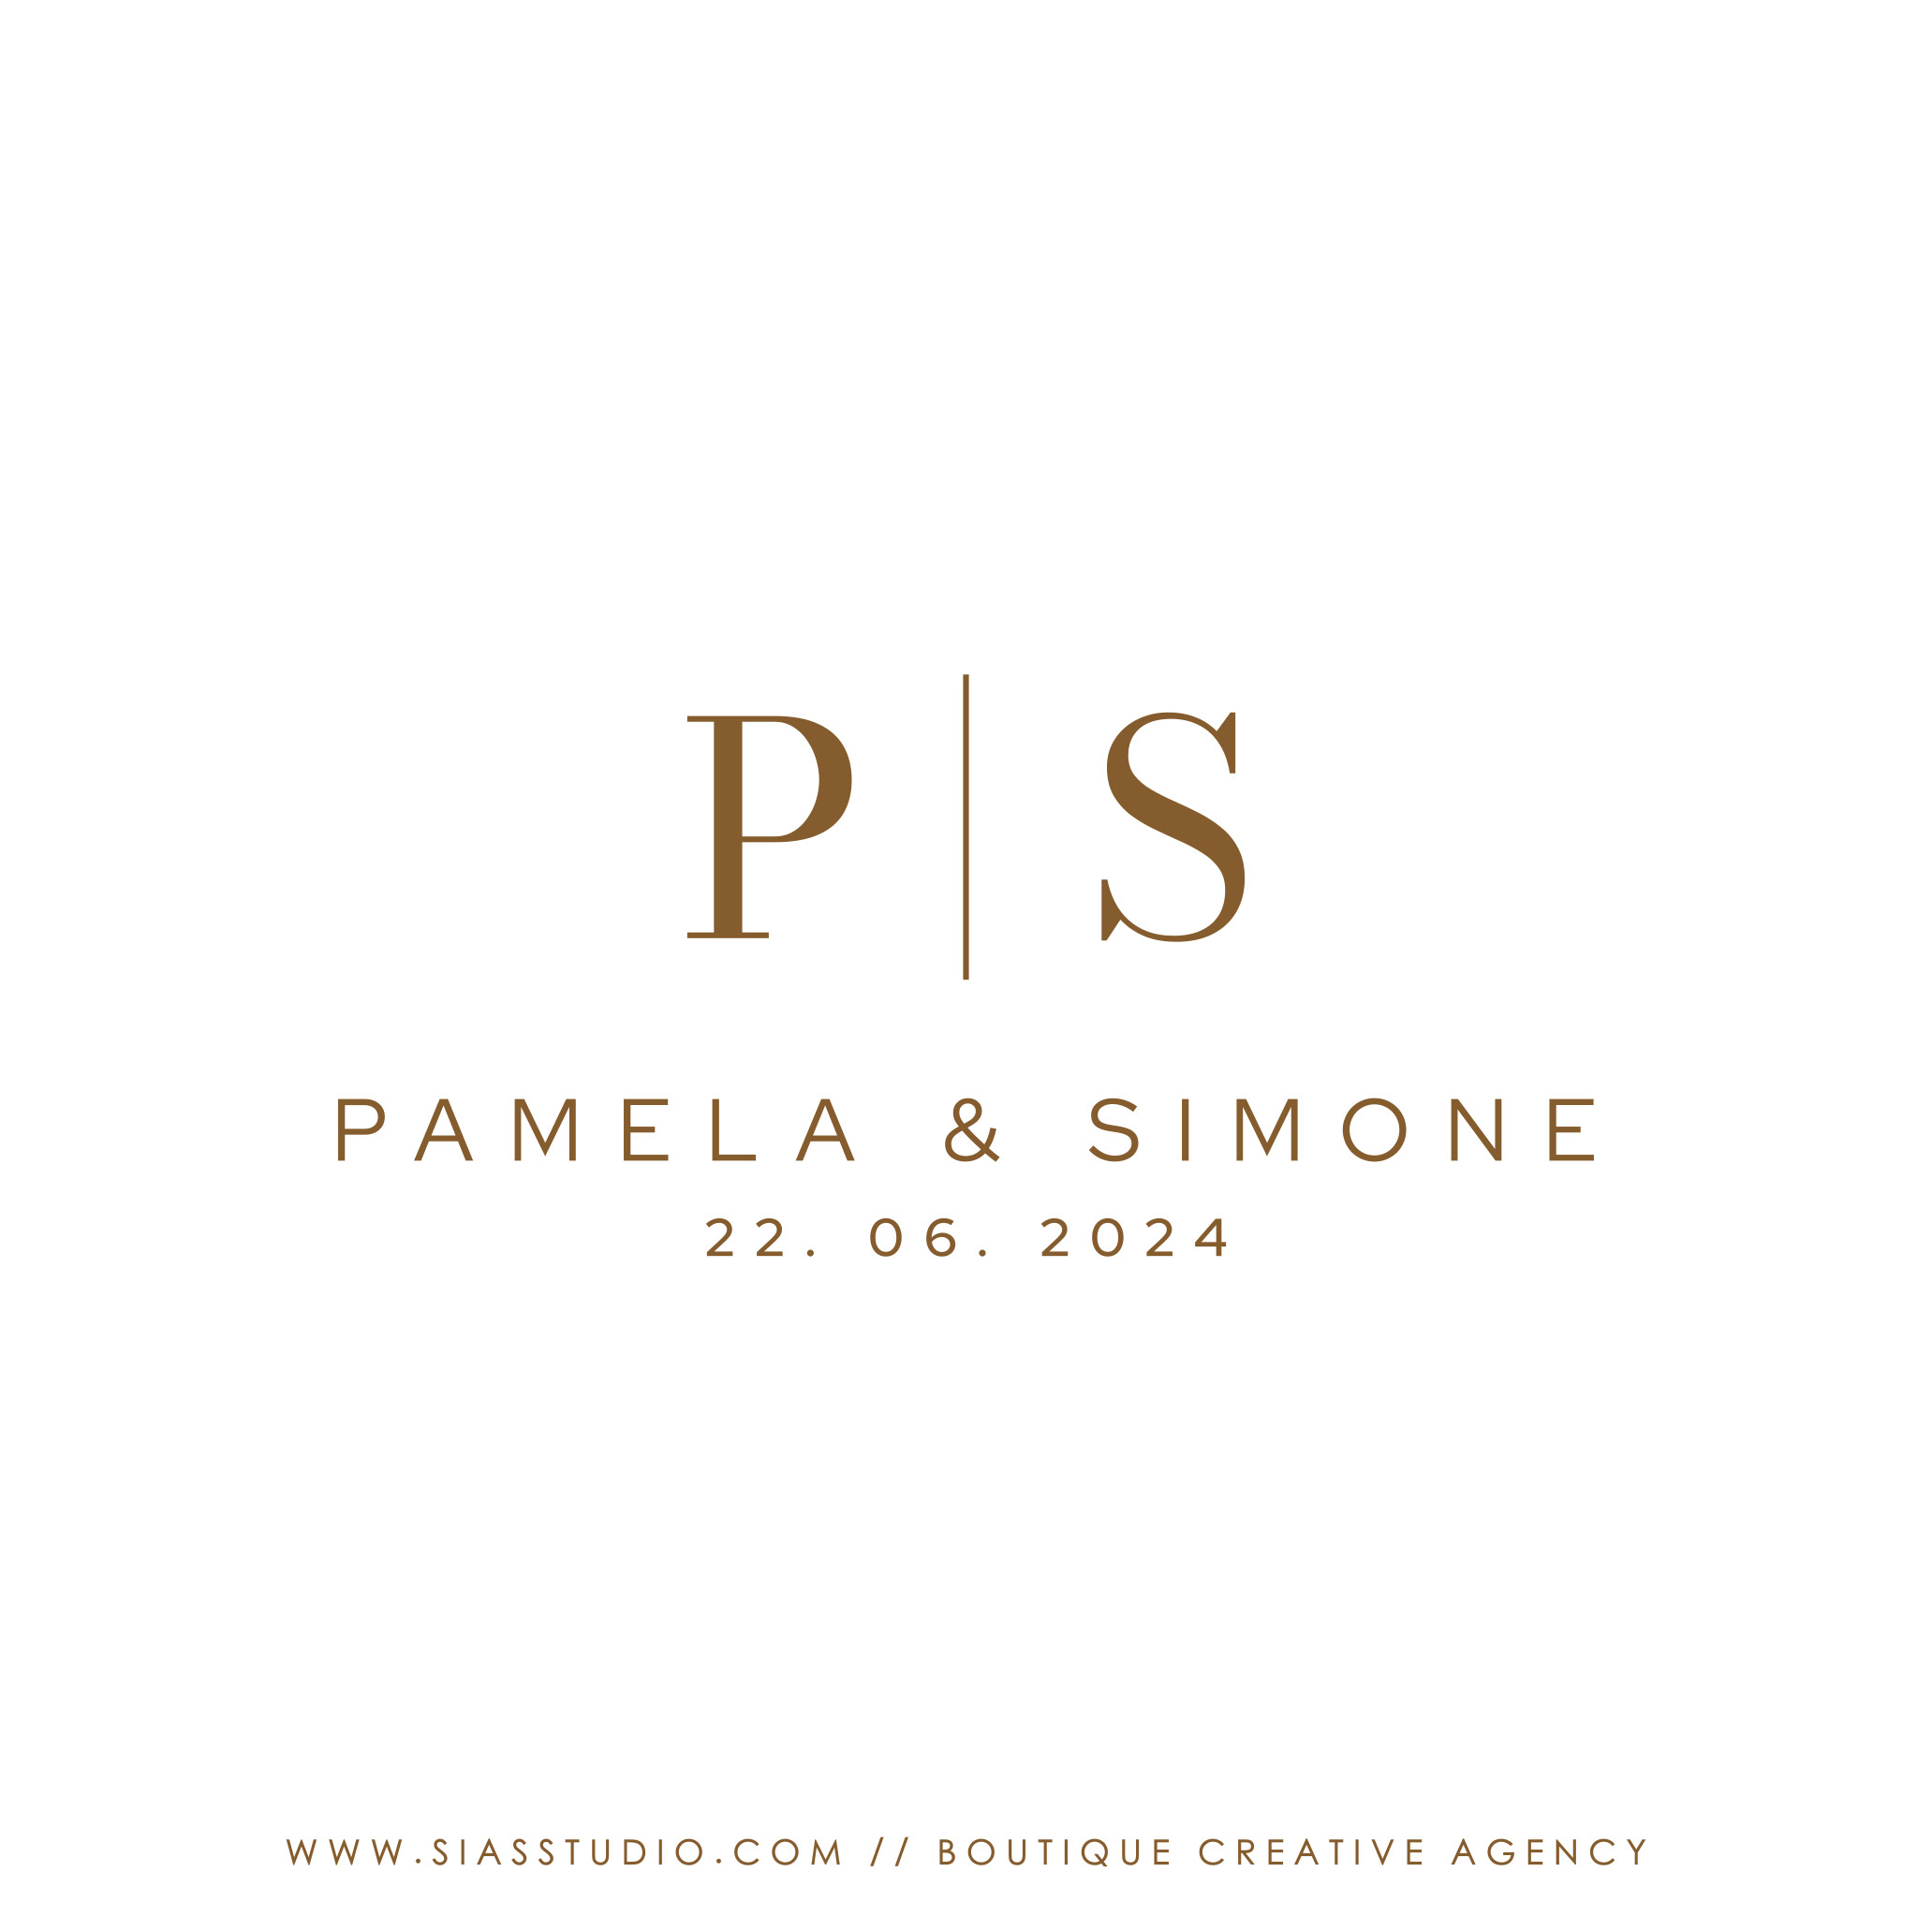 Pamela & Simone - Logo design di matrimonio